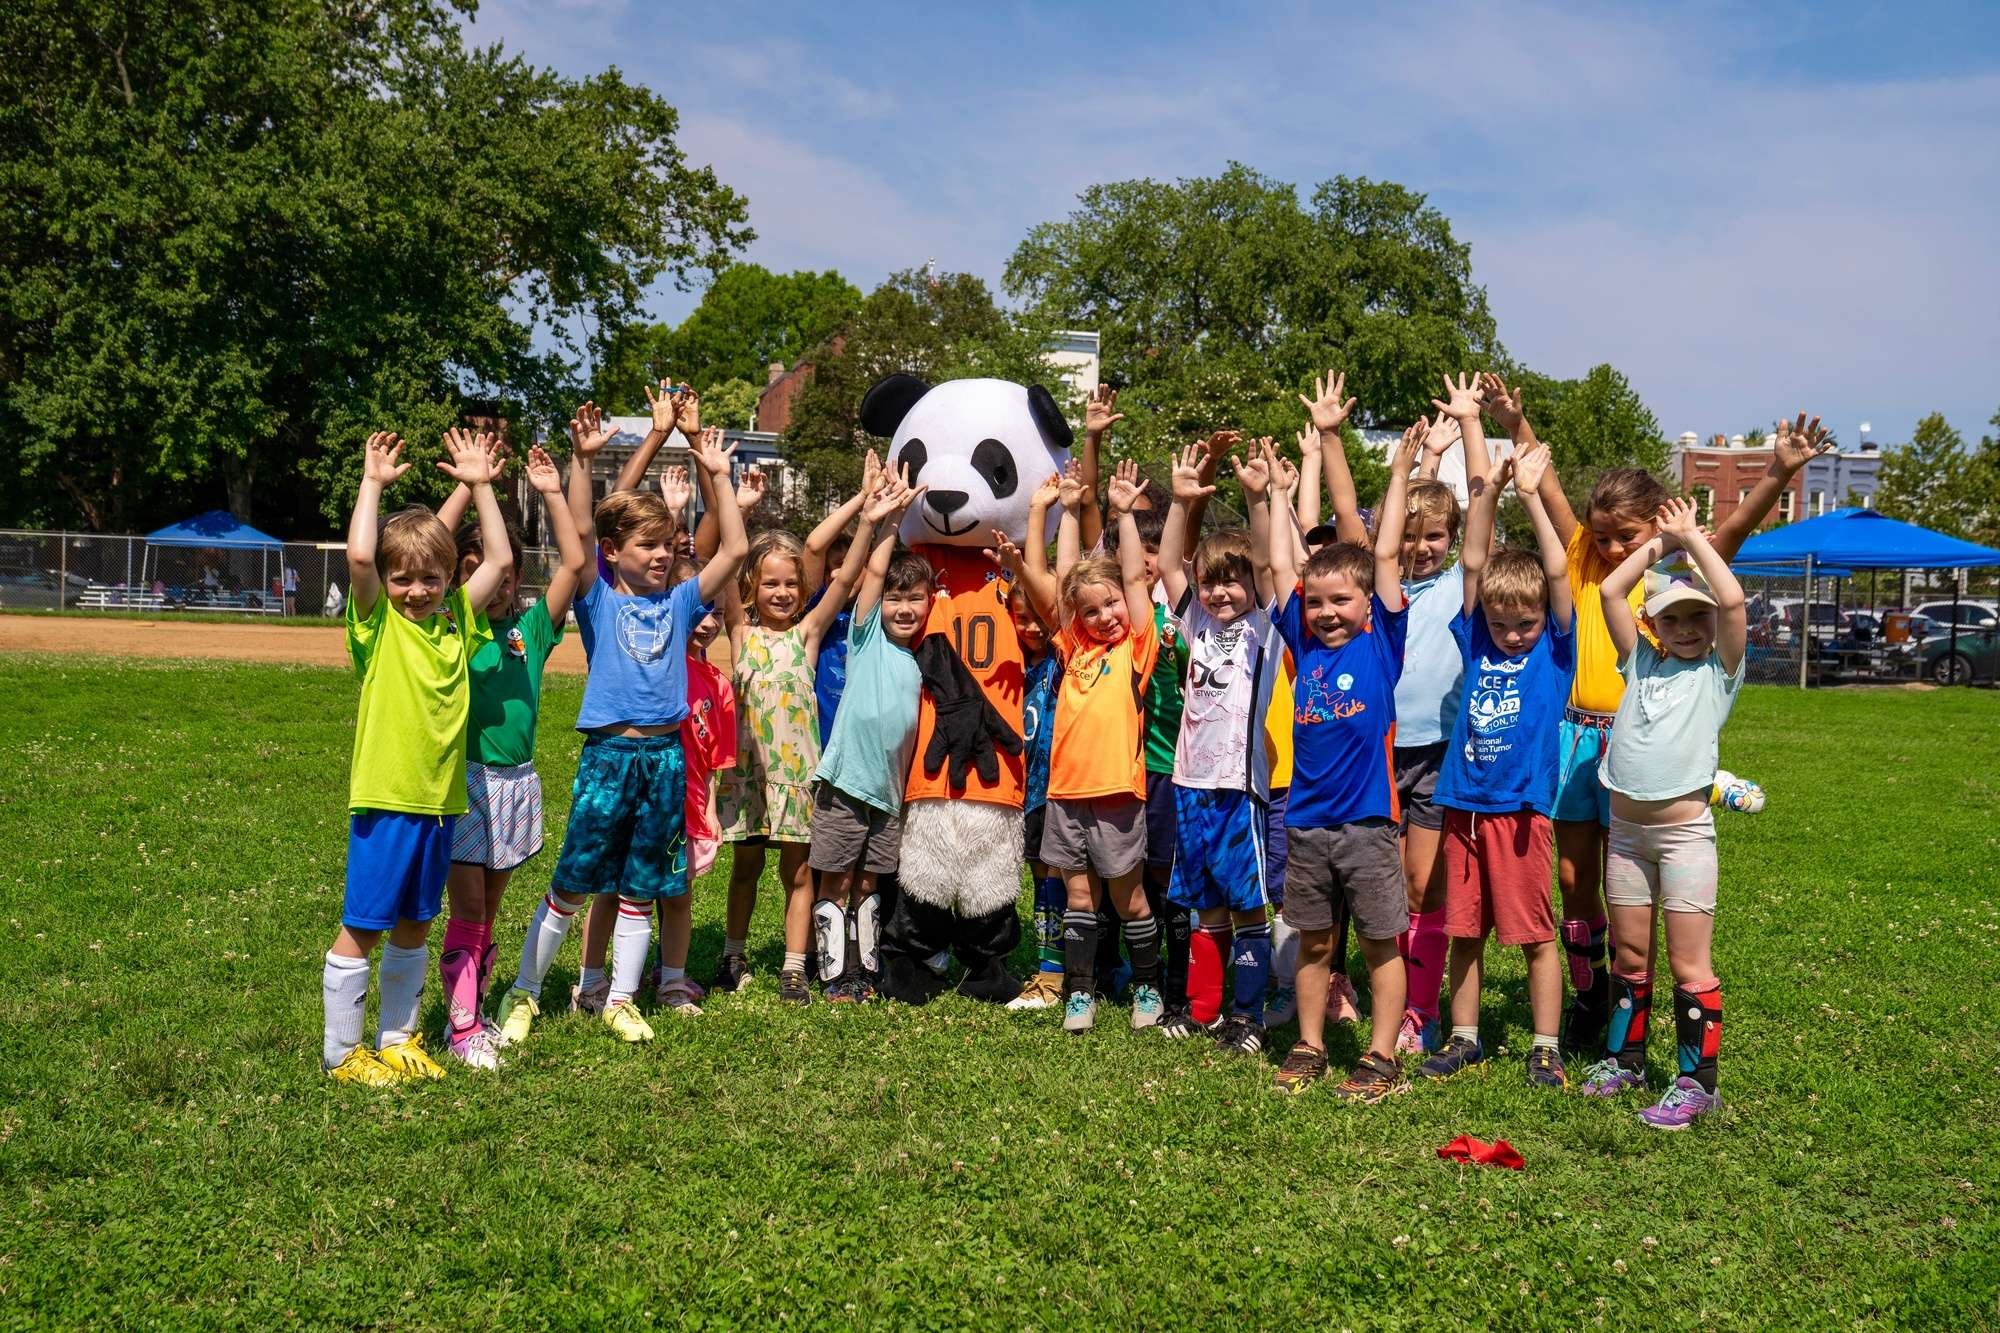 Dc-way-soccer-club-for-kids-in-washington-dc-summer-camp-at-tyler-elementary-school- 0210.jpg